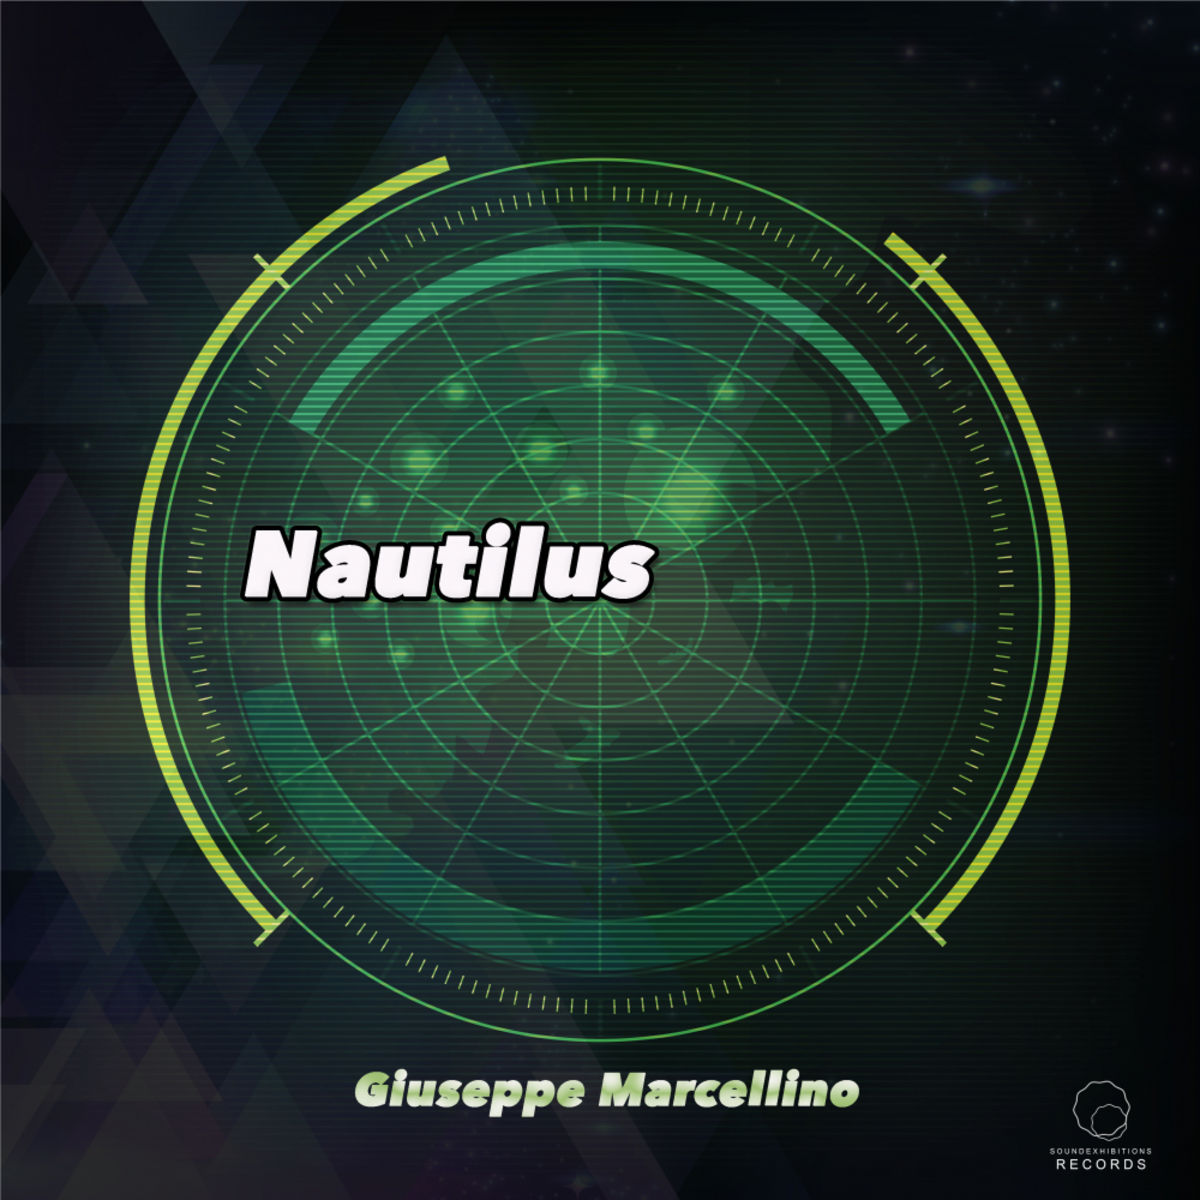 Giuseppe Marcellino - Nautilus / Sound Exhibitions Records